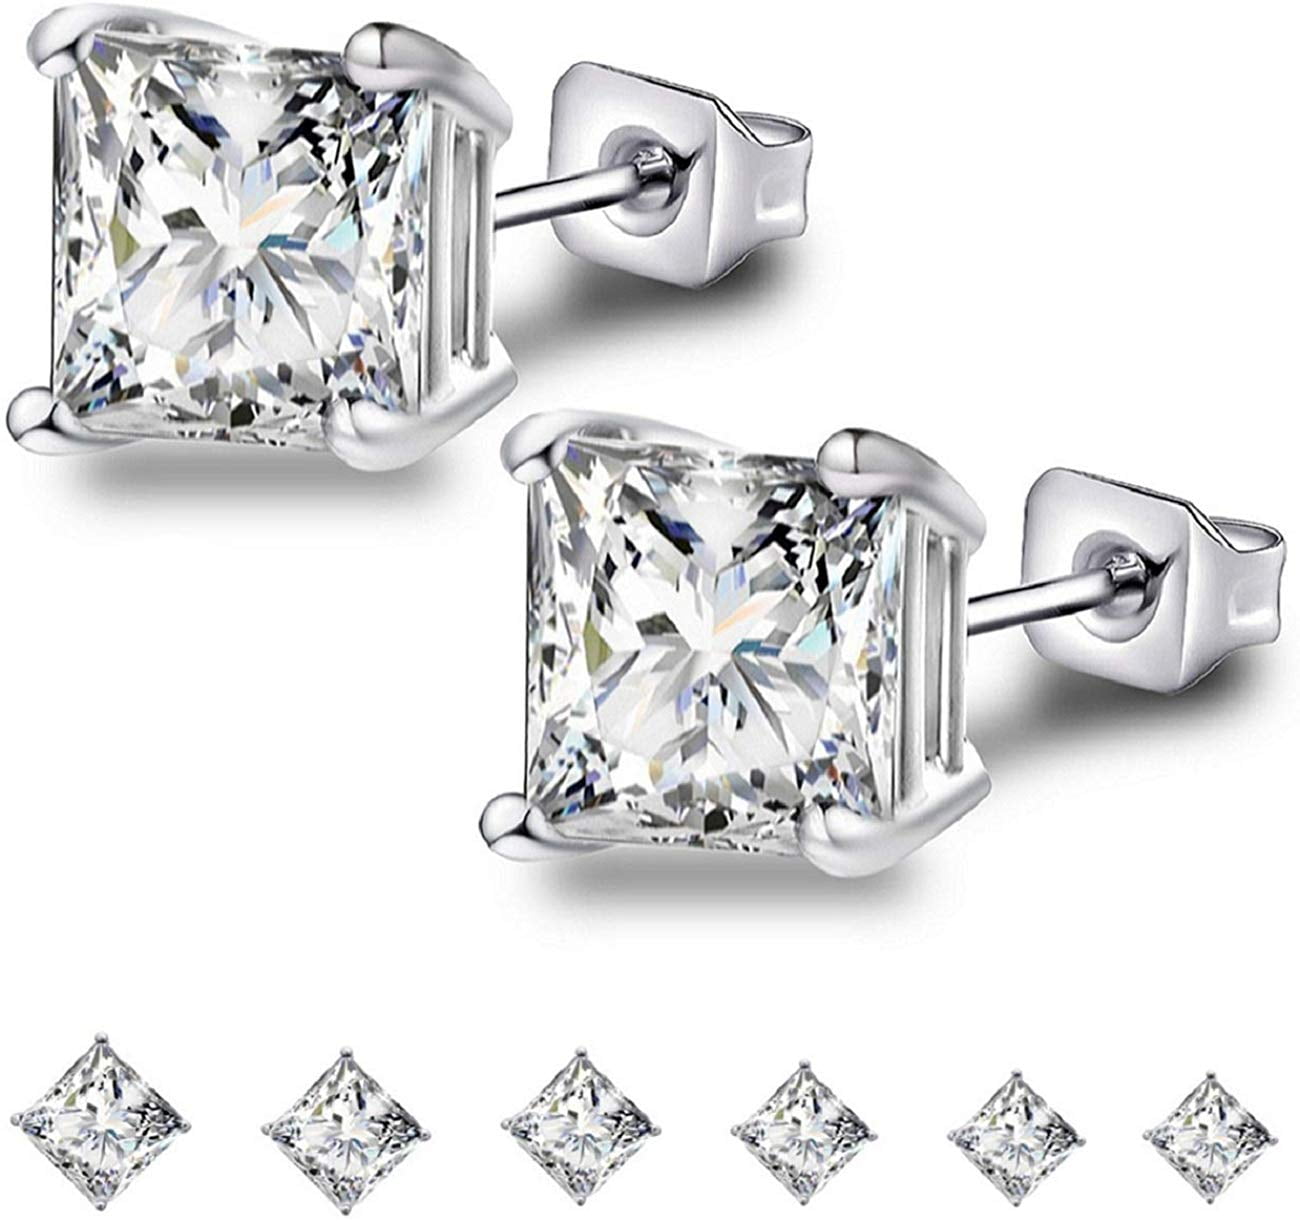 Sterling silver square cut cz stud earrings